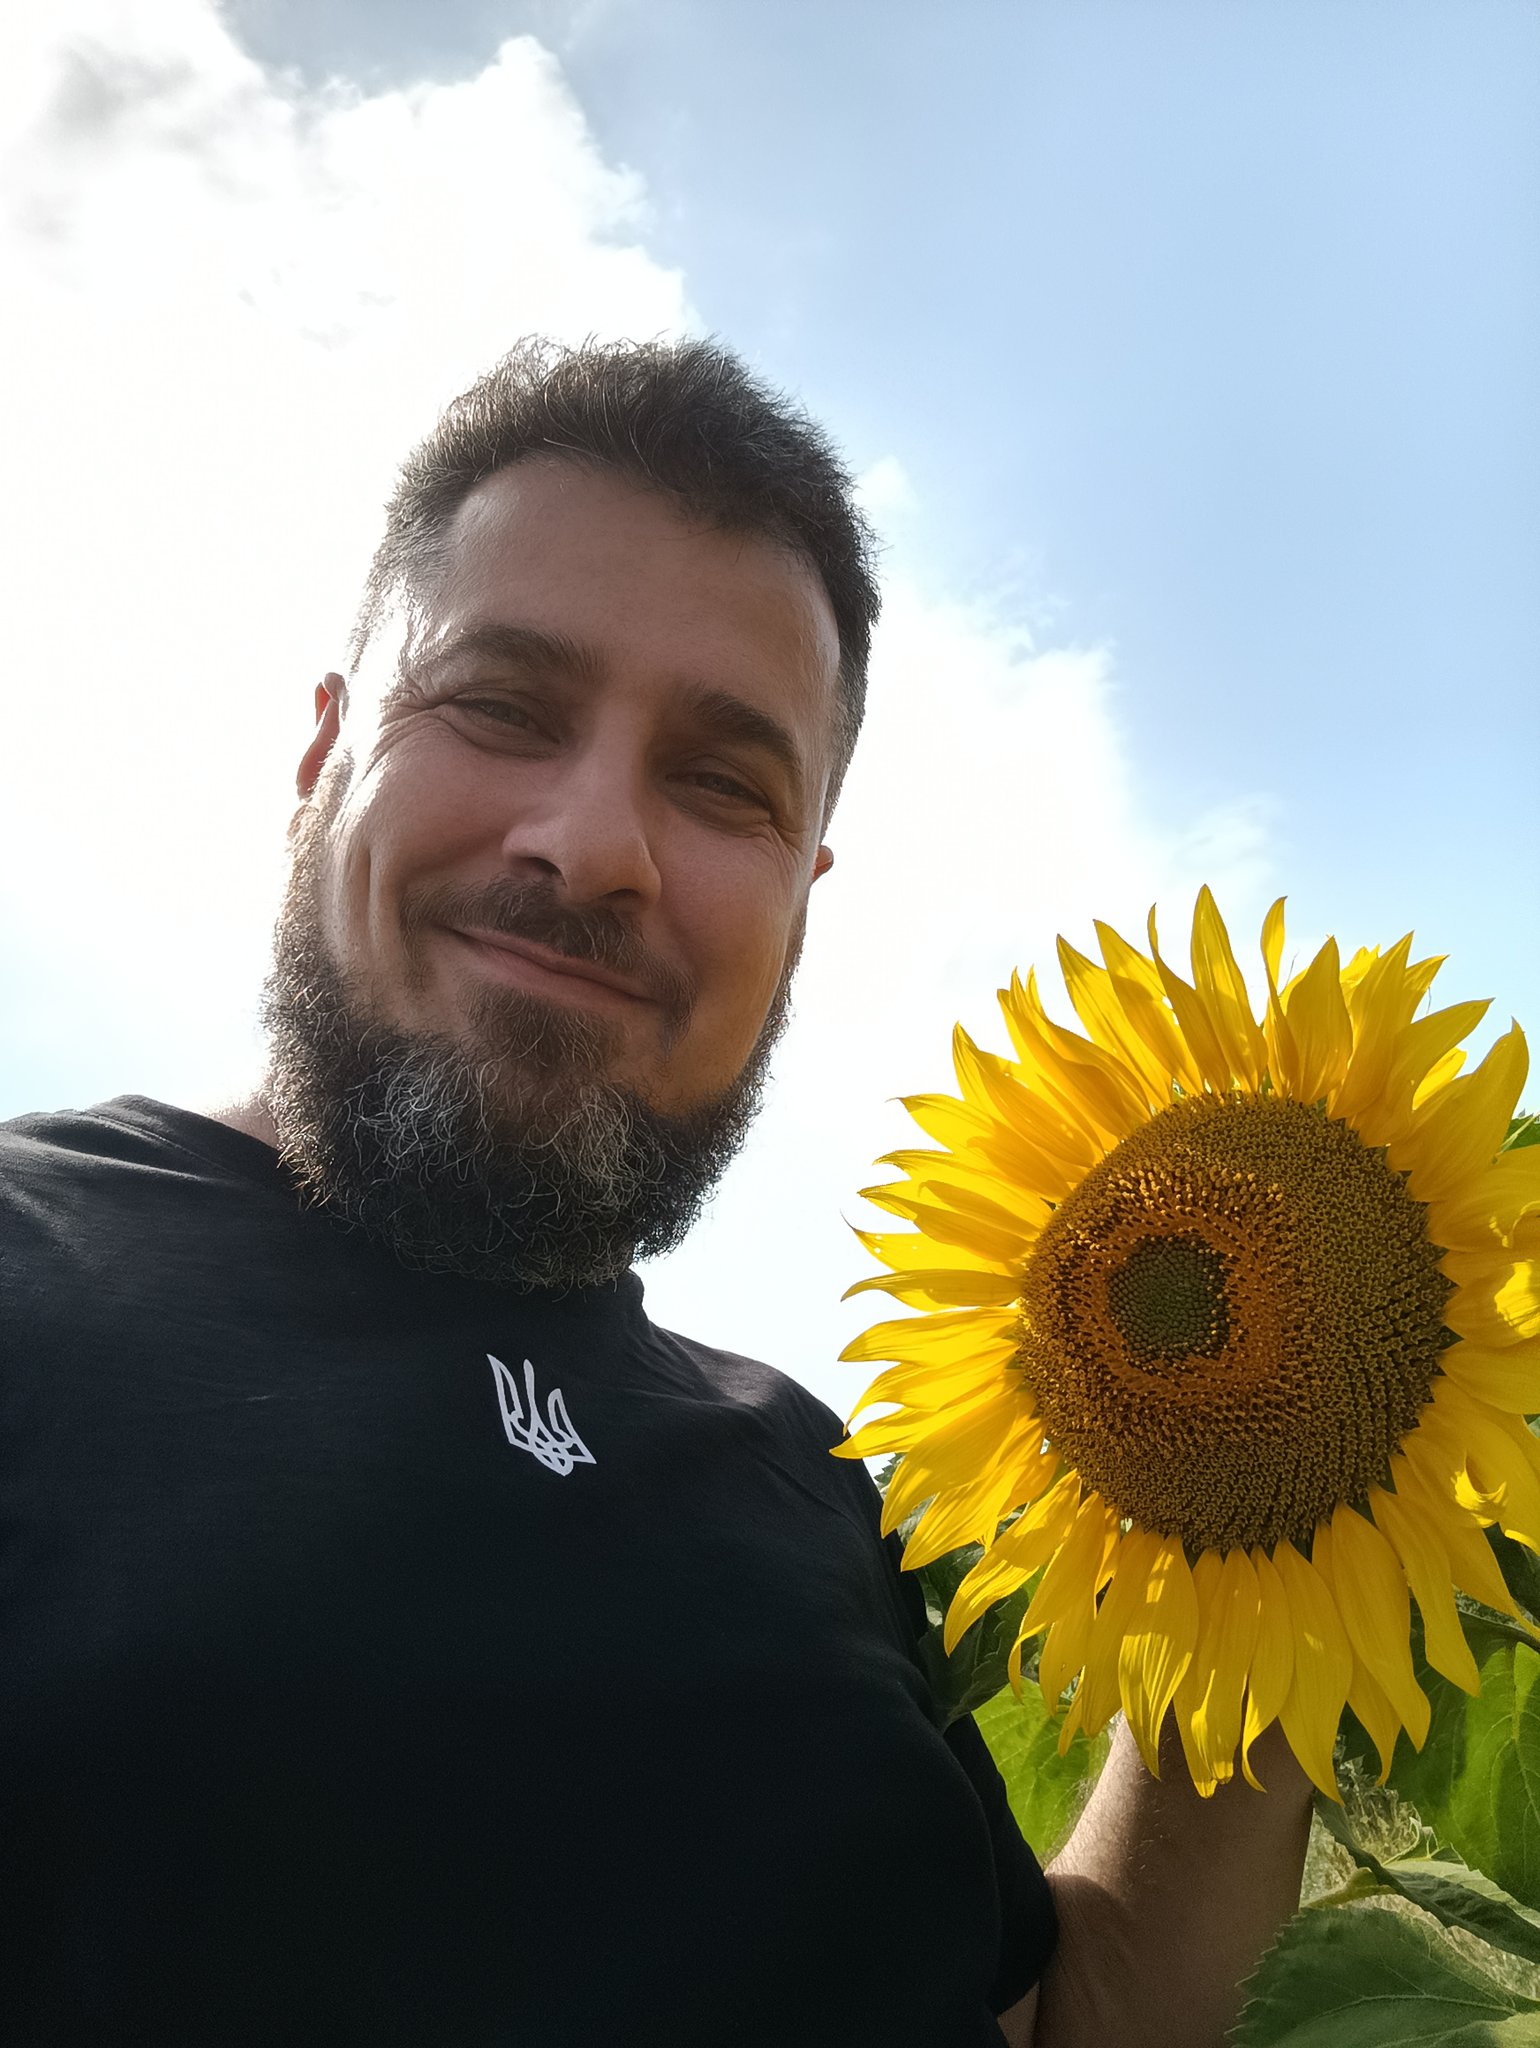 Ukrainian author Oleg Veretskiy, standing next to a beautiful sunflower.